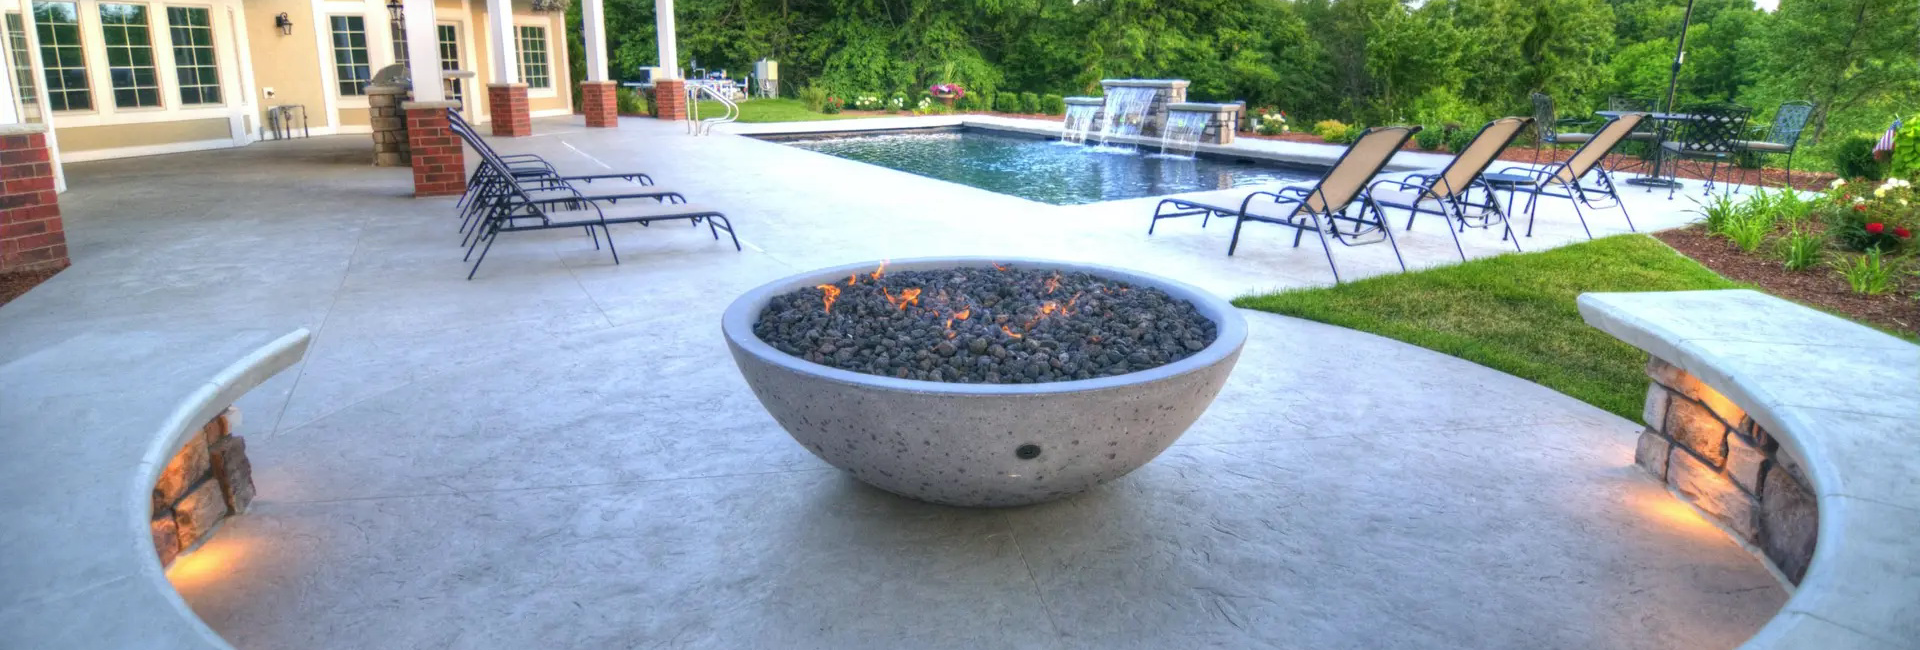 Concrete slate texture skin backyard pool firepit